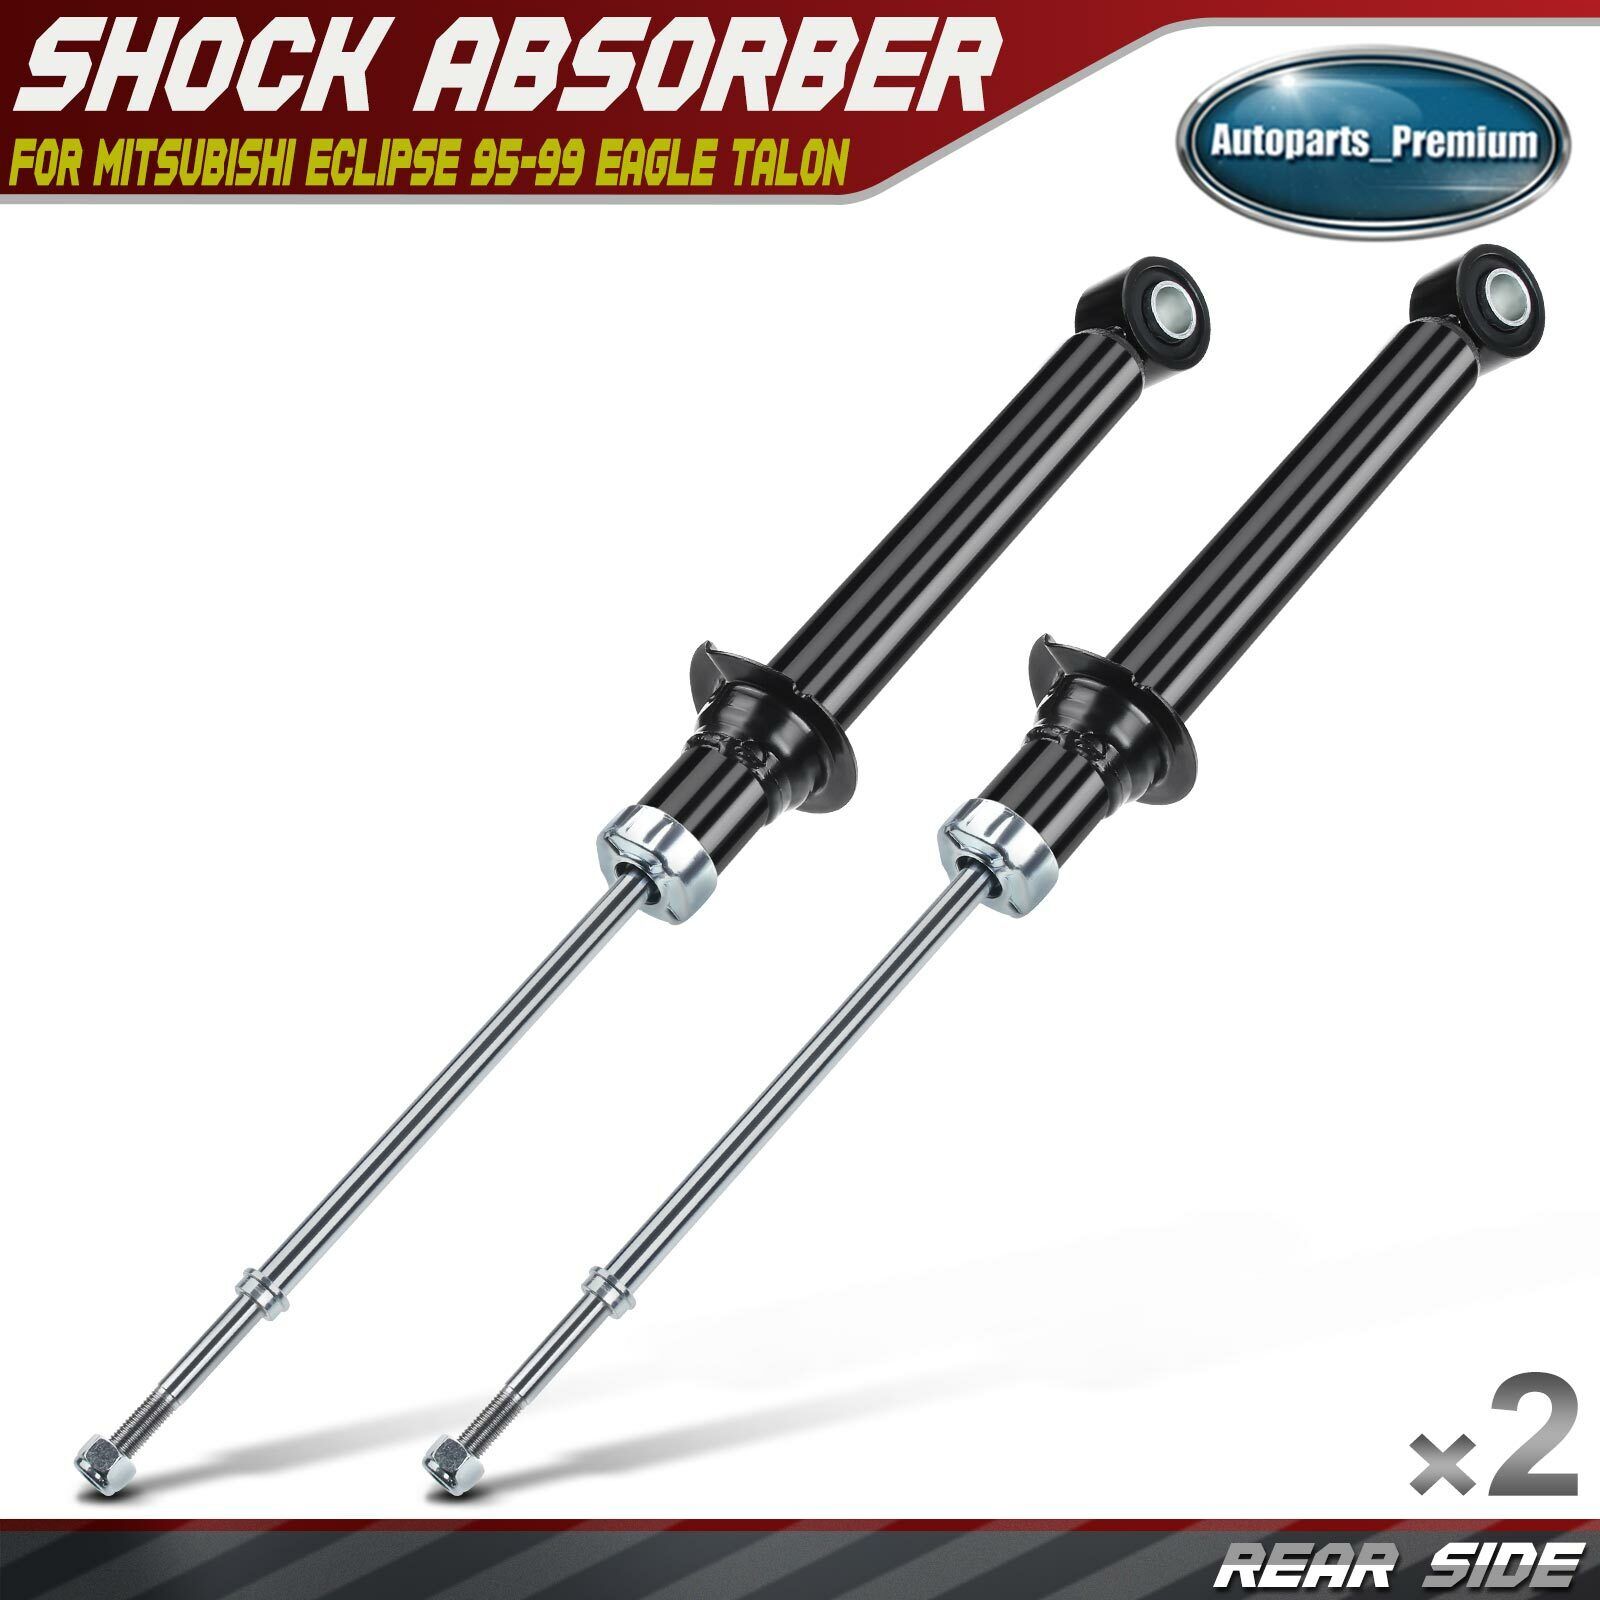 2x Shock Struts Absorber for Mitsubishi Eclipse 1995-1999 Eagle Talon 95-98 Rear